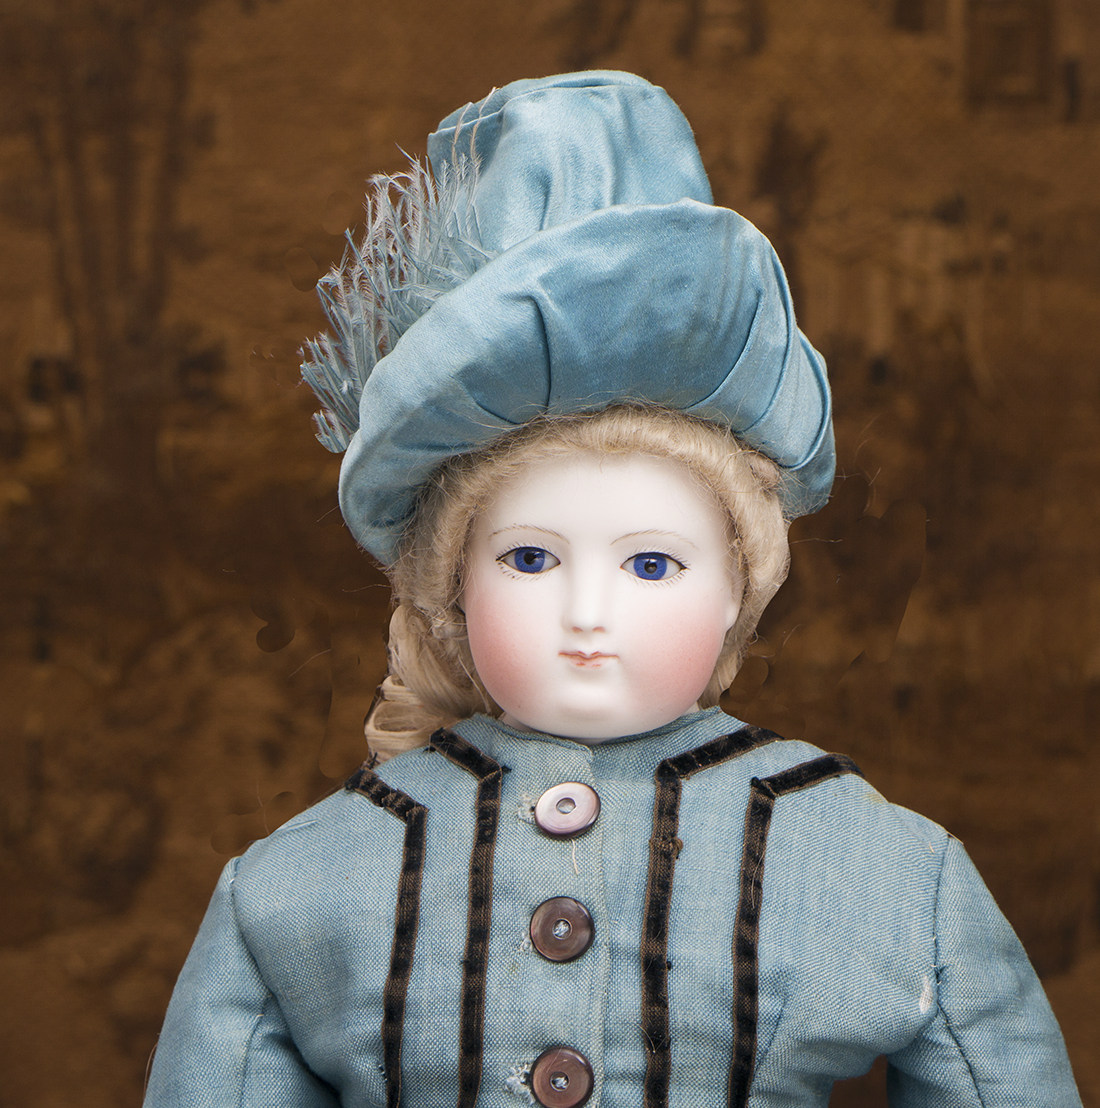  fashion doll by Blampoix